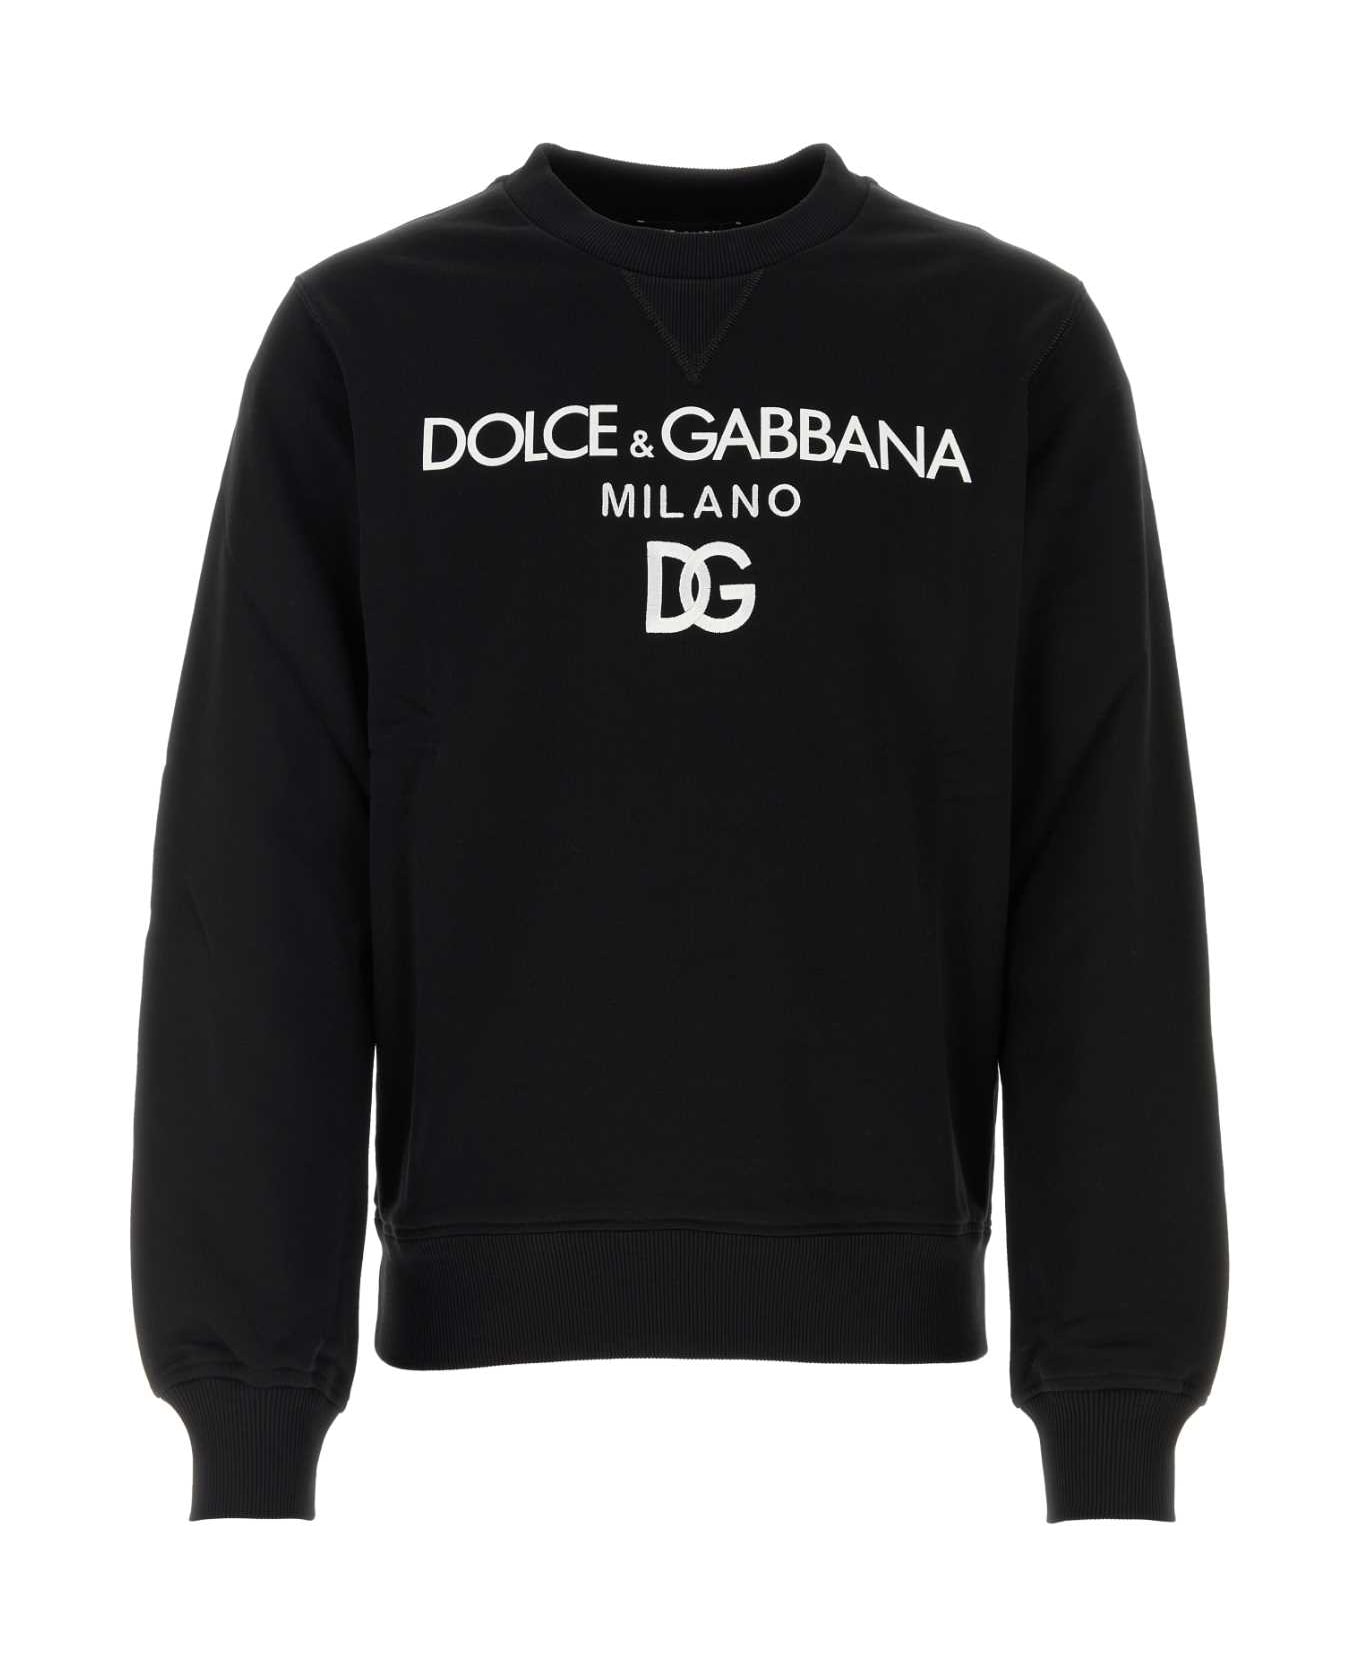 Dolce & Gabbana Black Cotton Sweatshirt - N0000 フリース